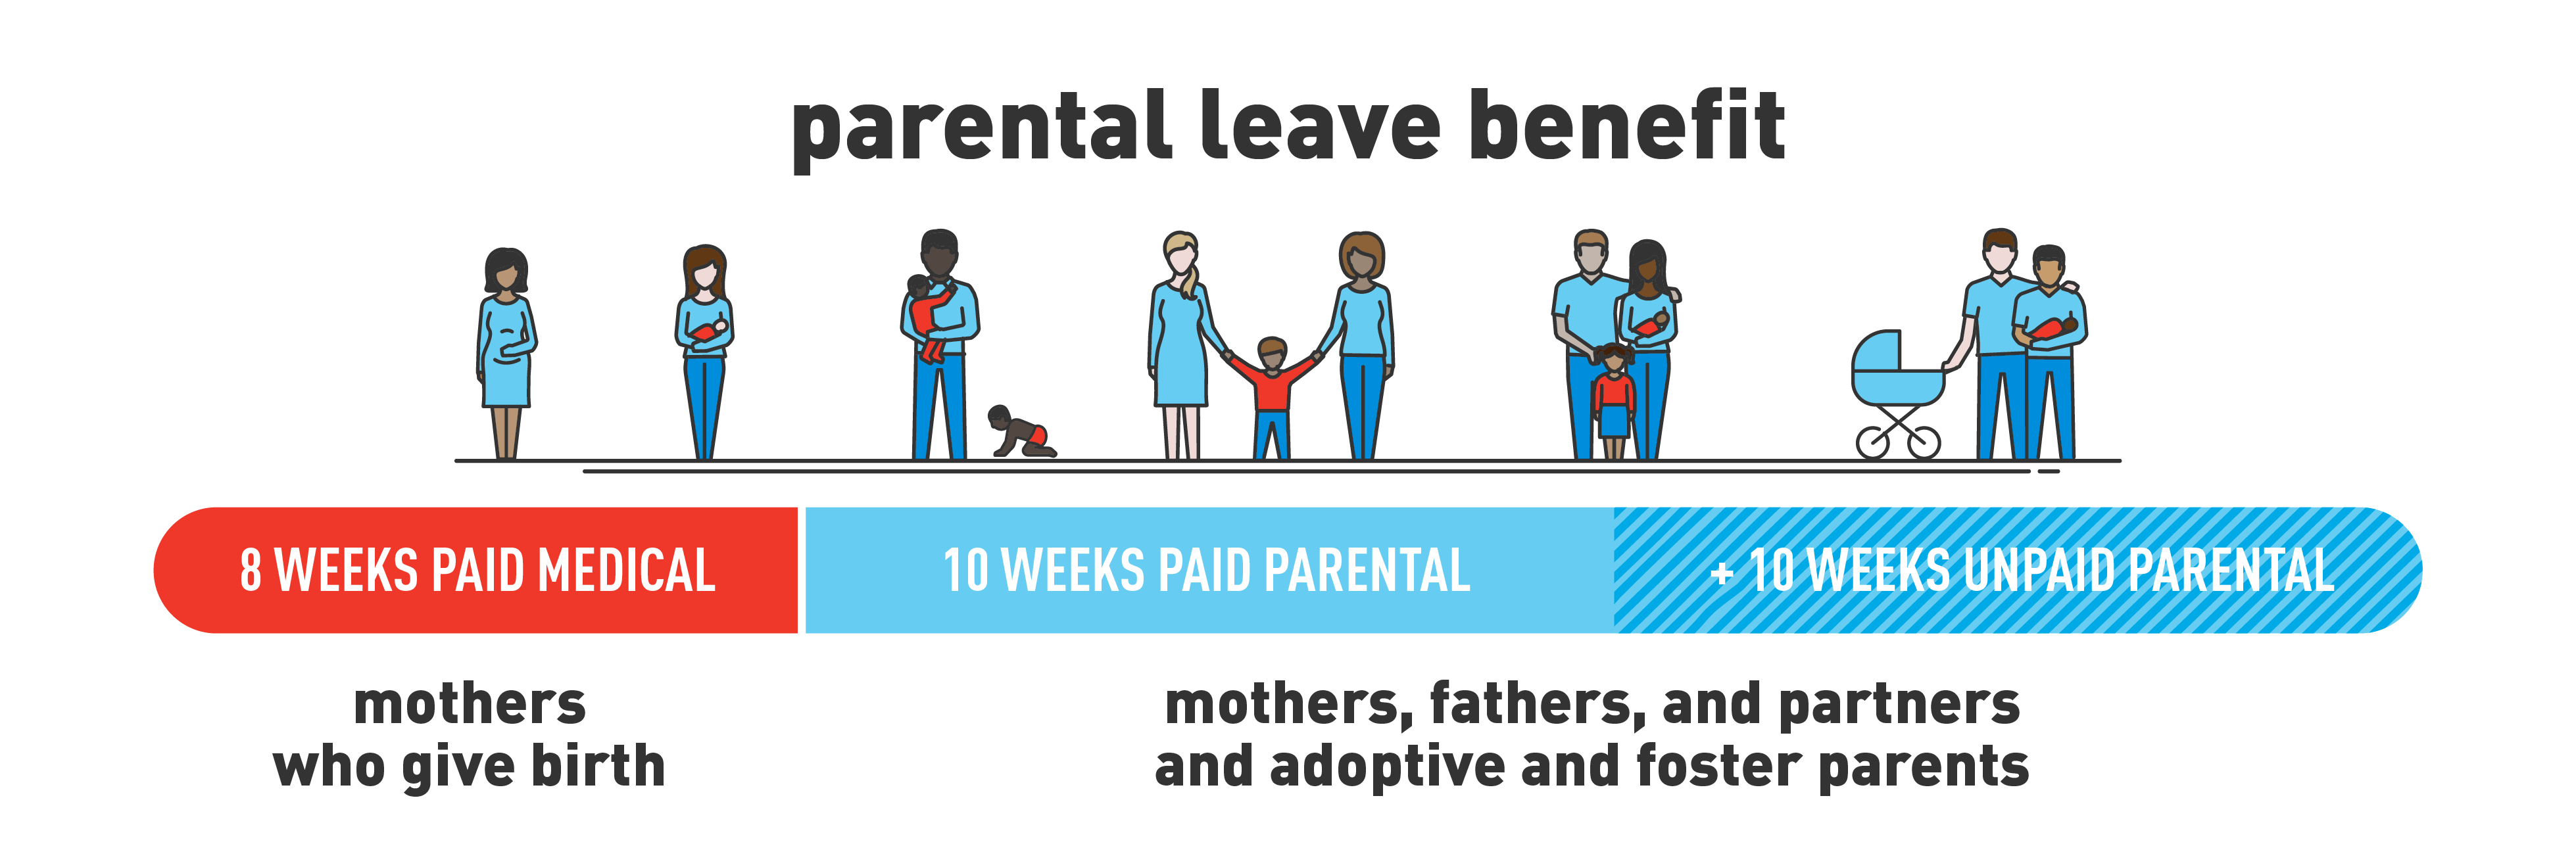 Child Care Rebate Paid Parental Leave